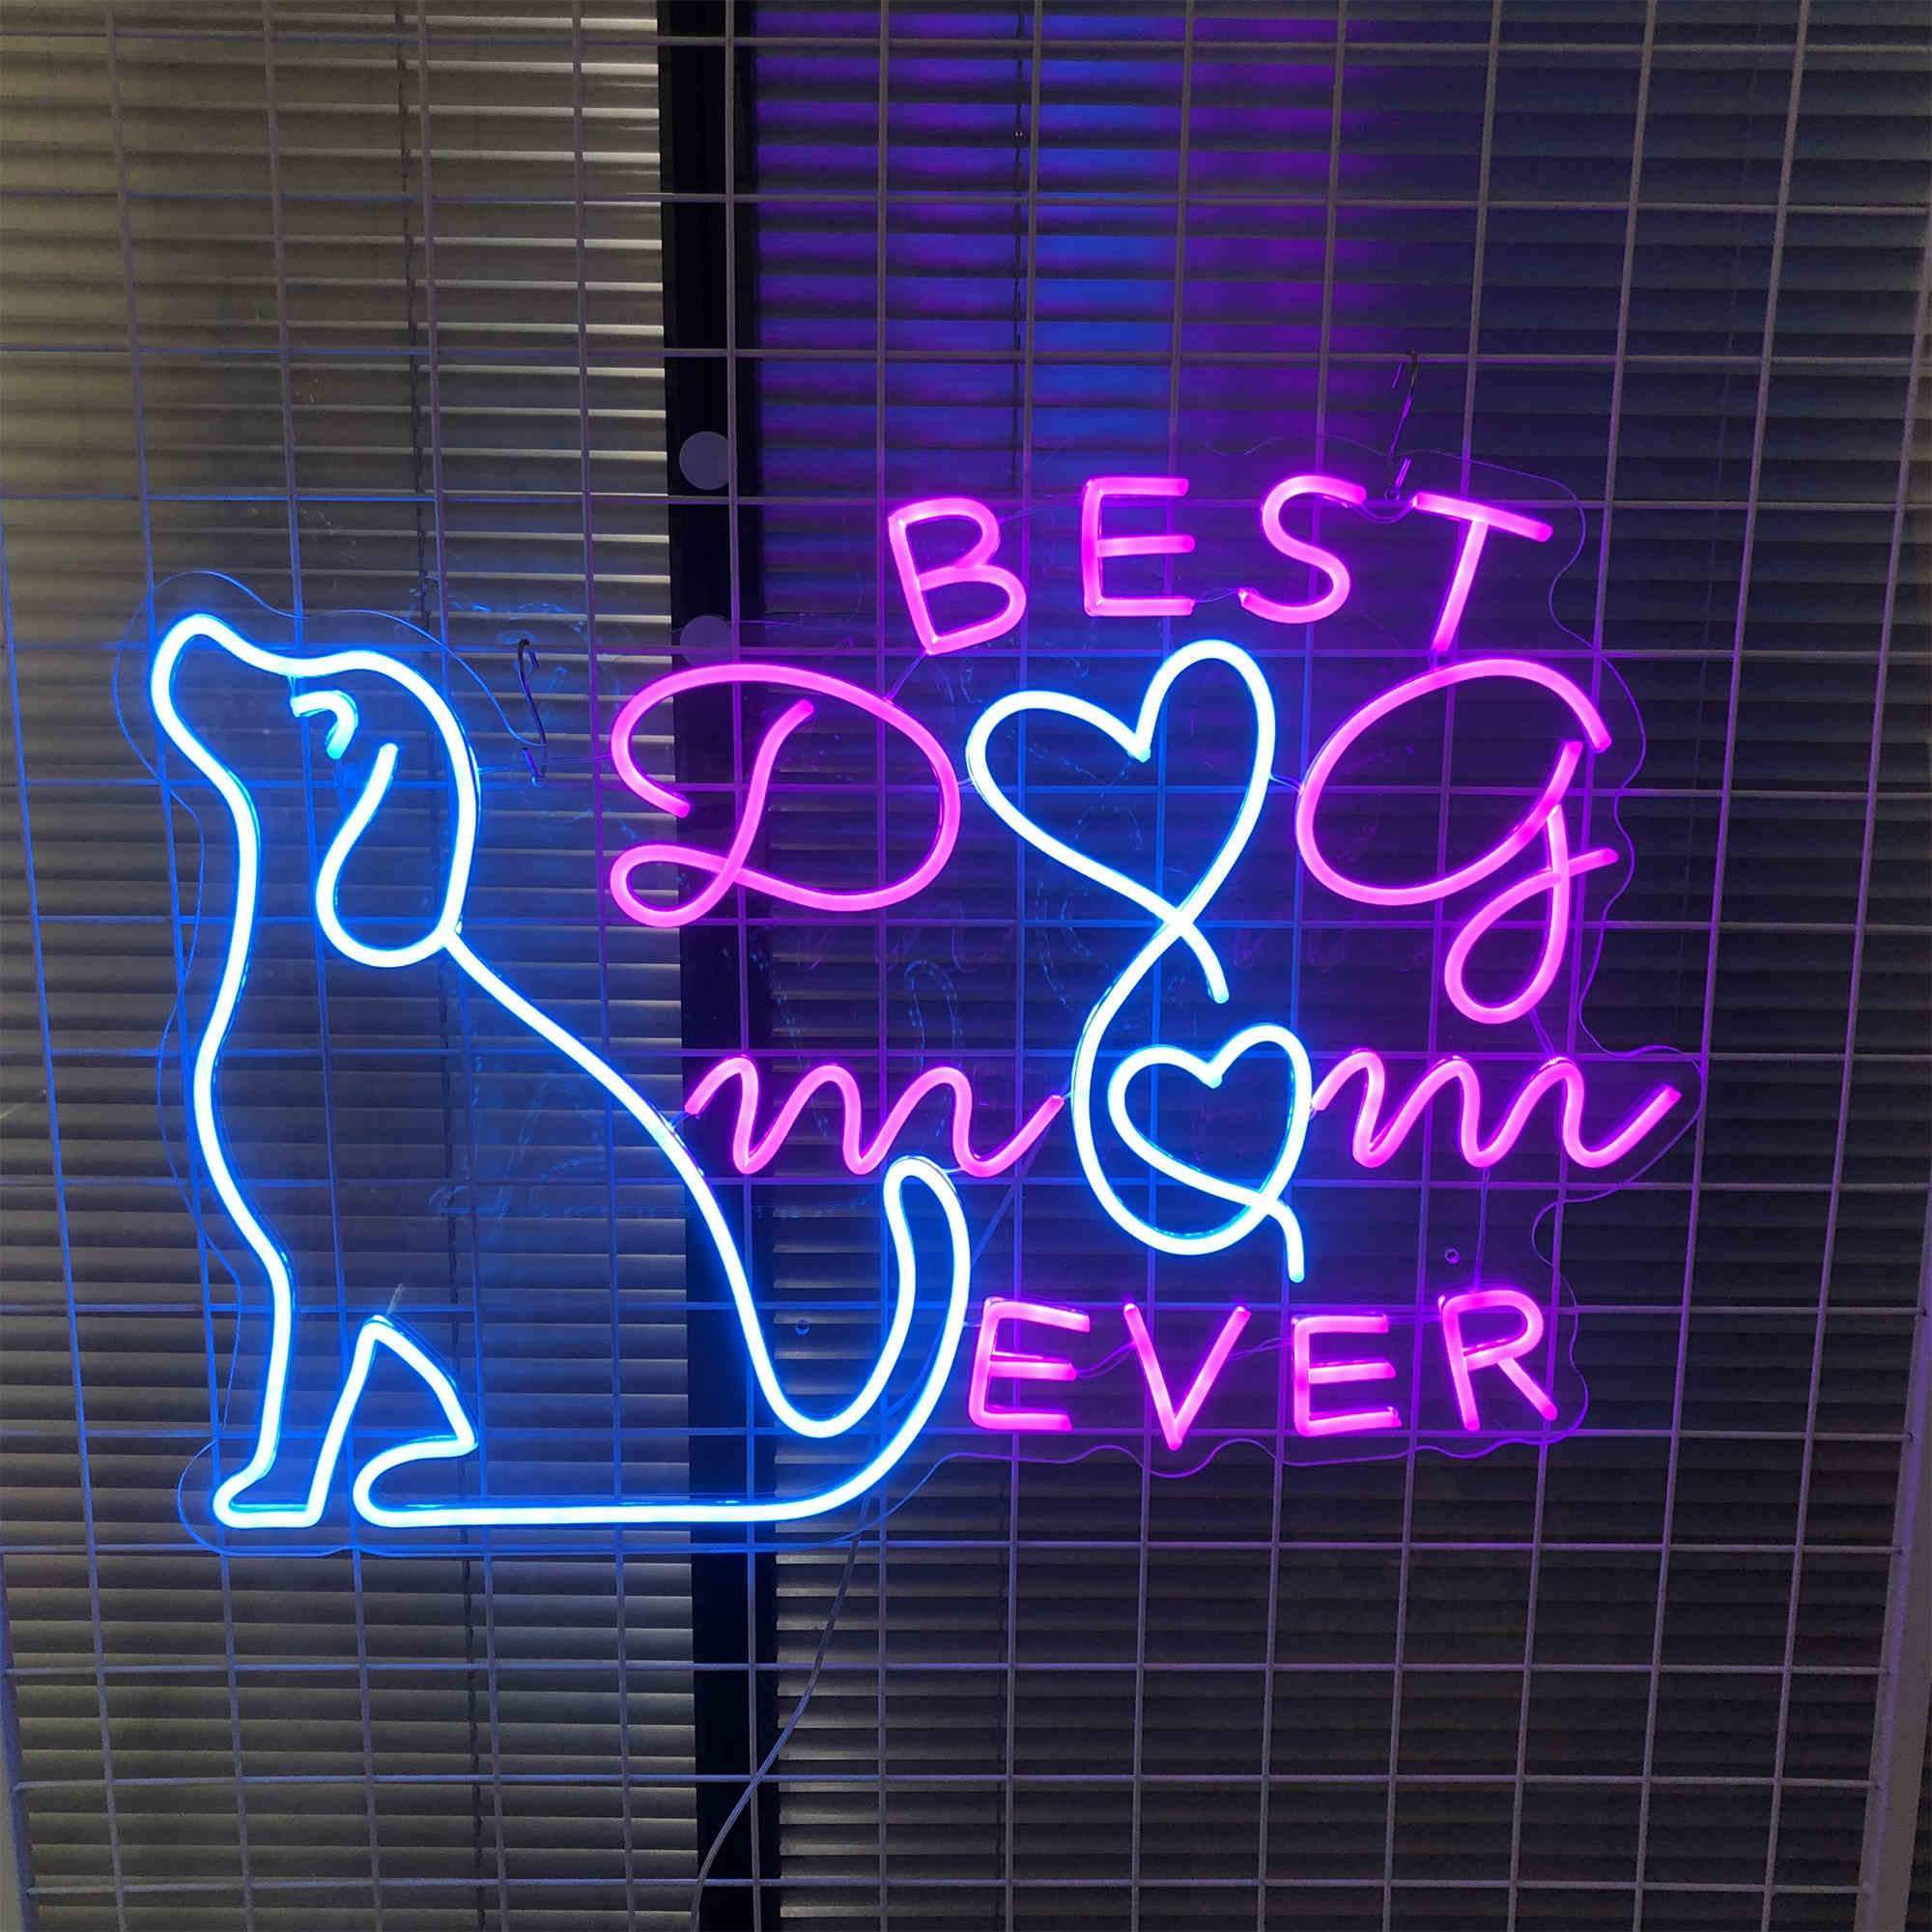 Best Dog Neon Sign Light